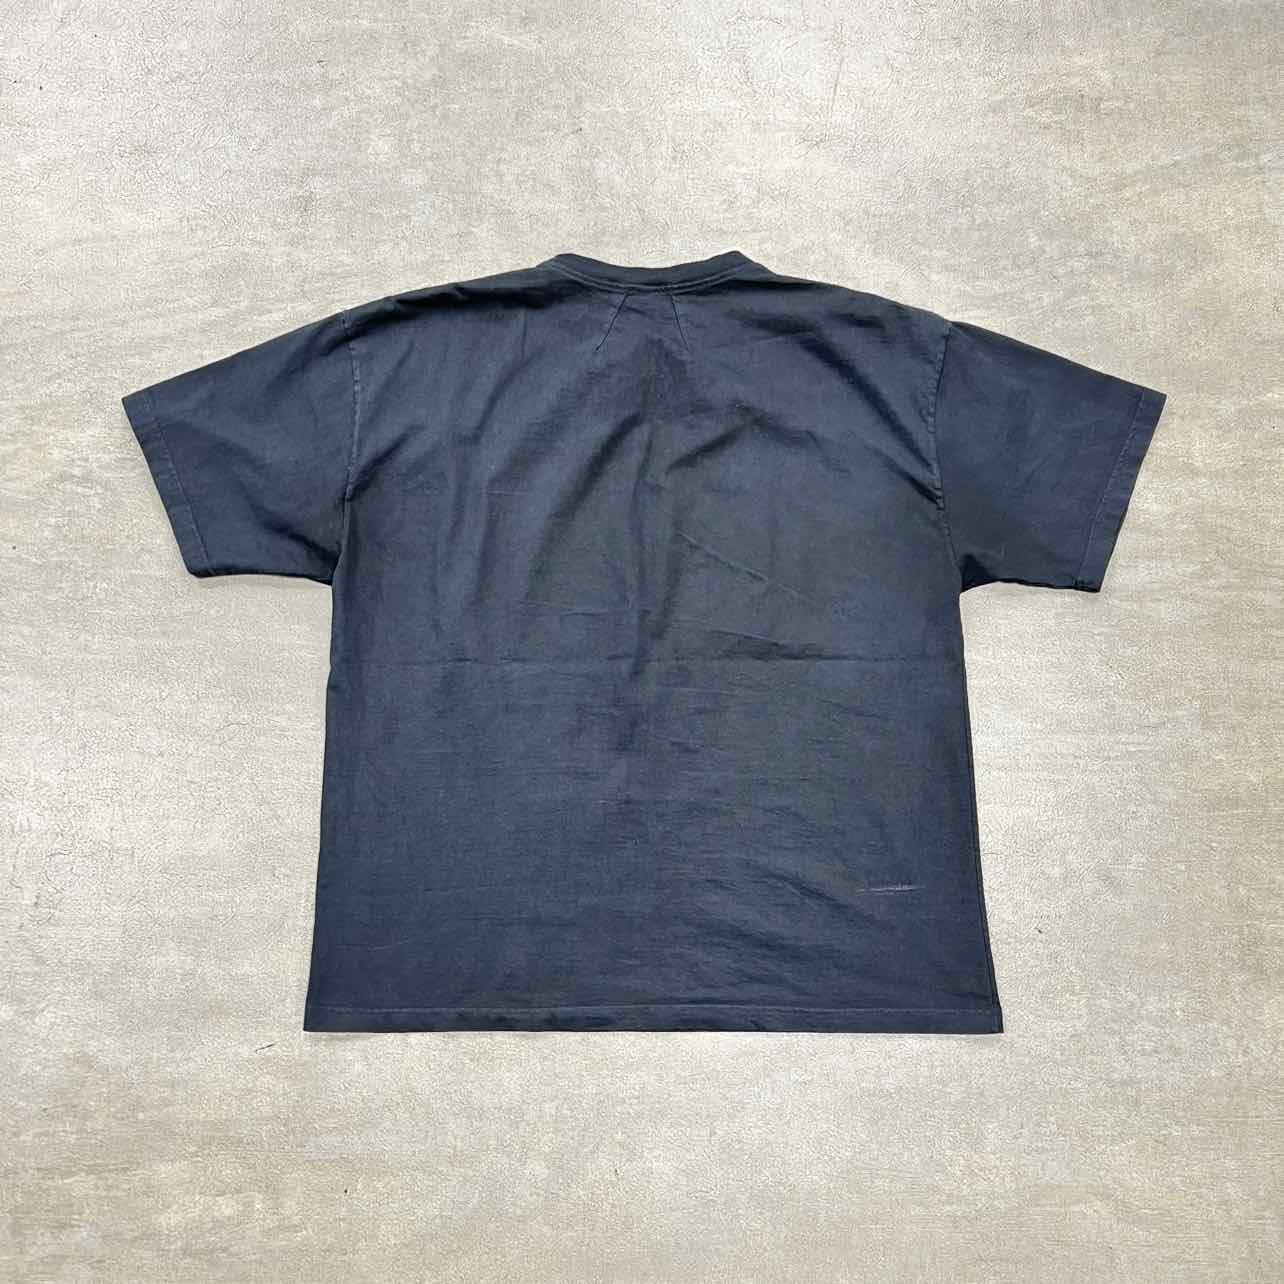 Rhude T-Shirt &quot;CASINO&quot; Black Used Size XL